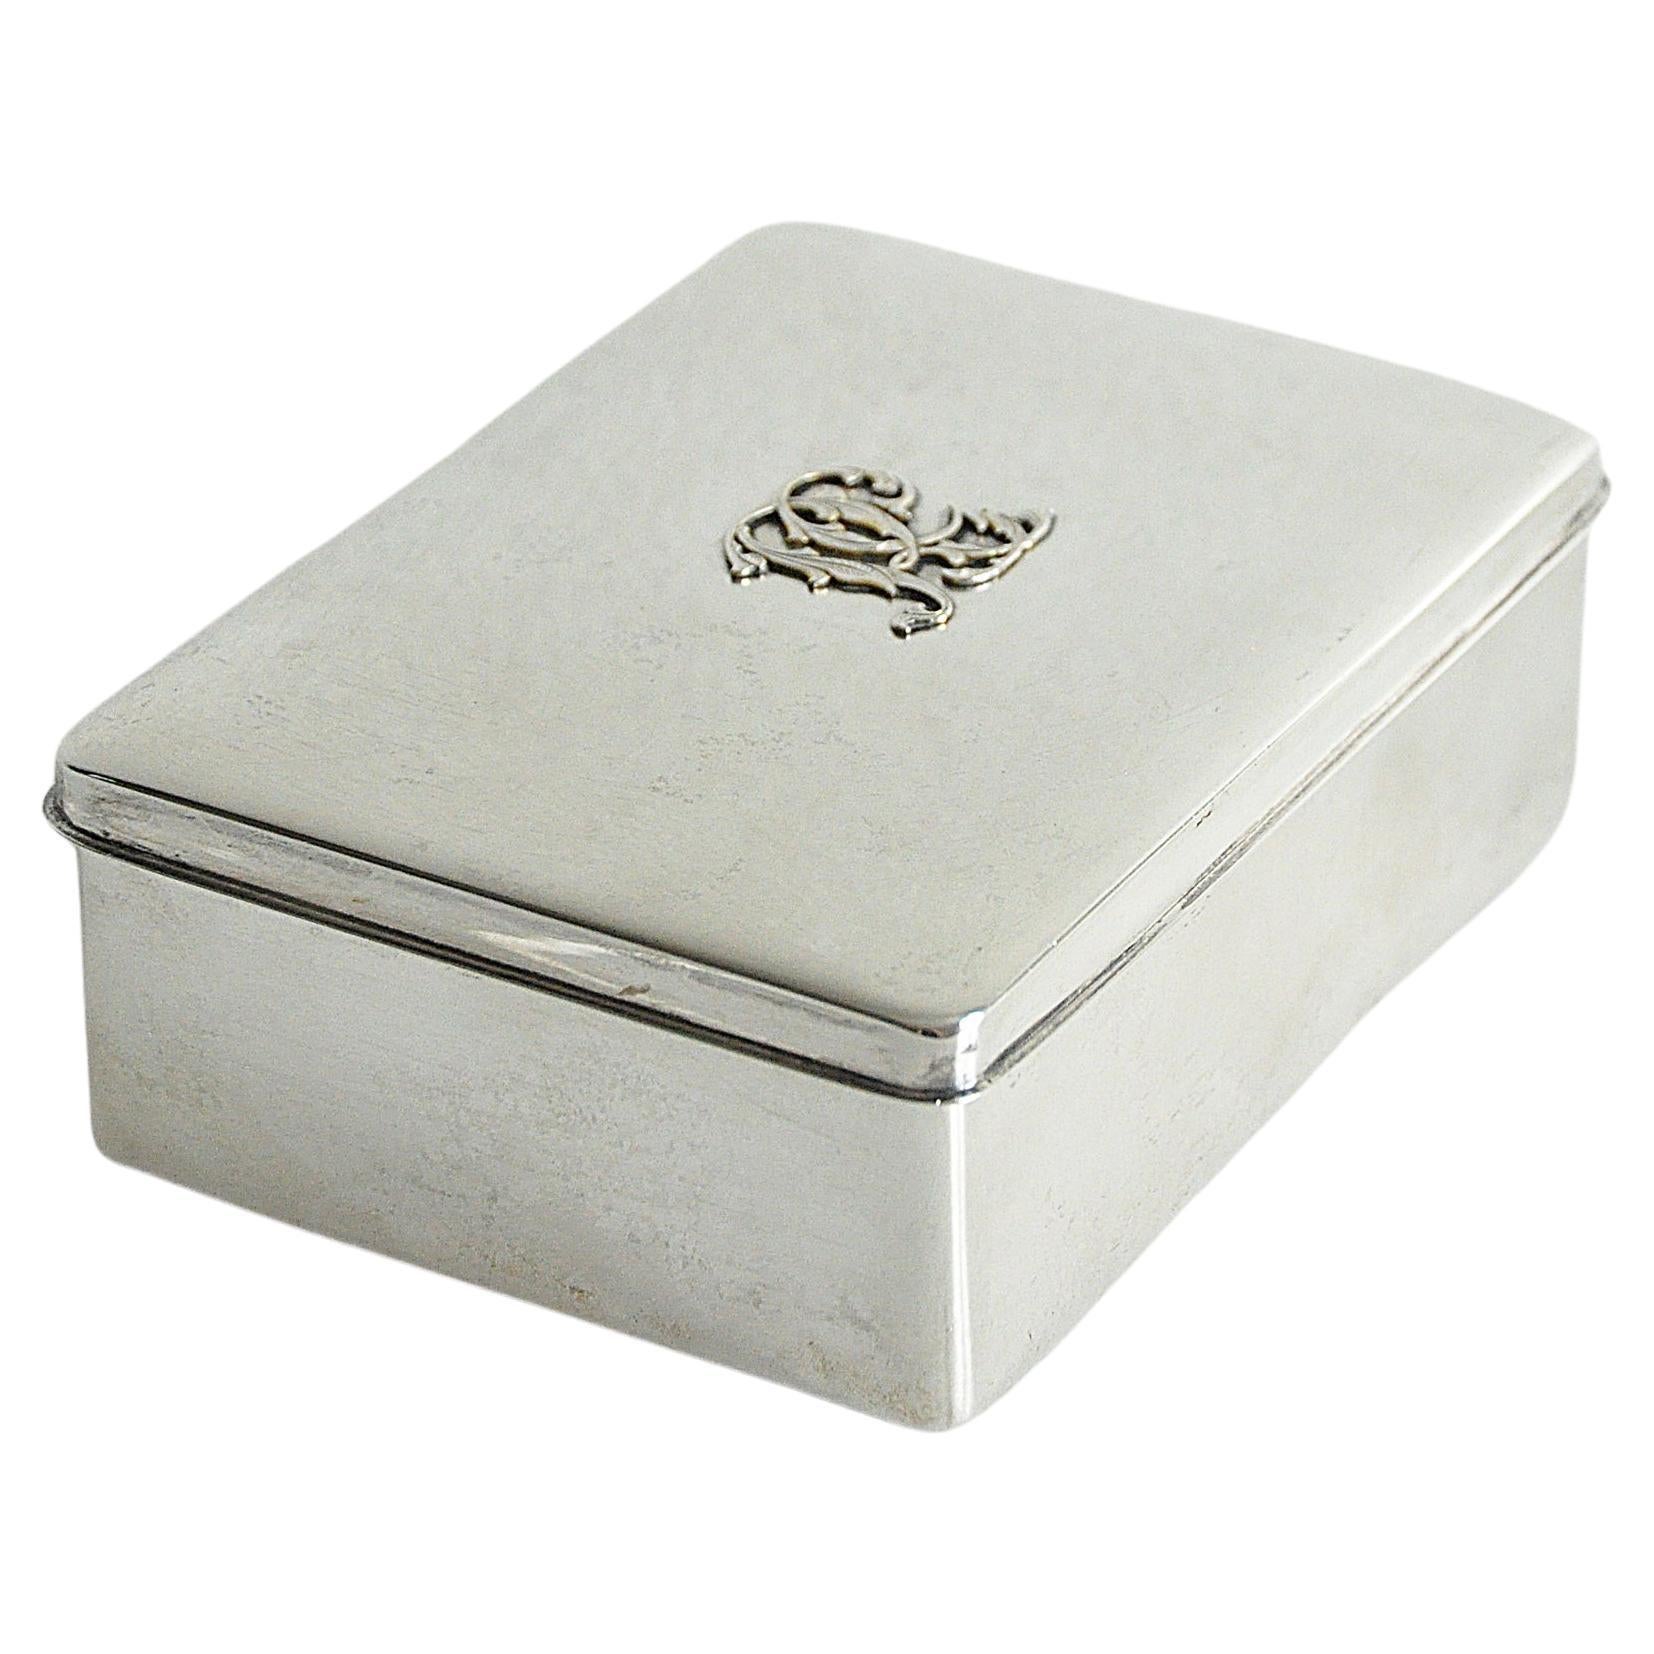 Scandinavian Modern Silver Box from C. G. Hallberg, Sweden -1937